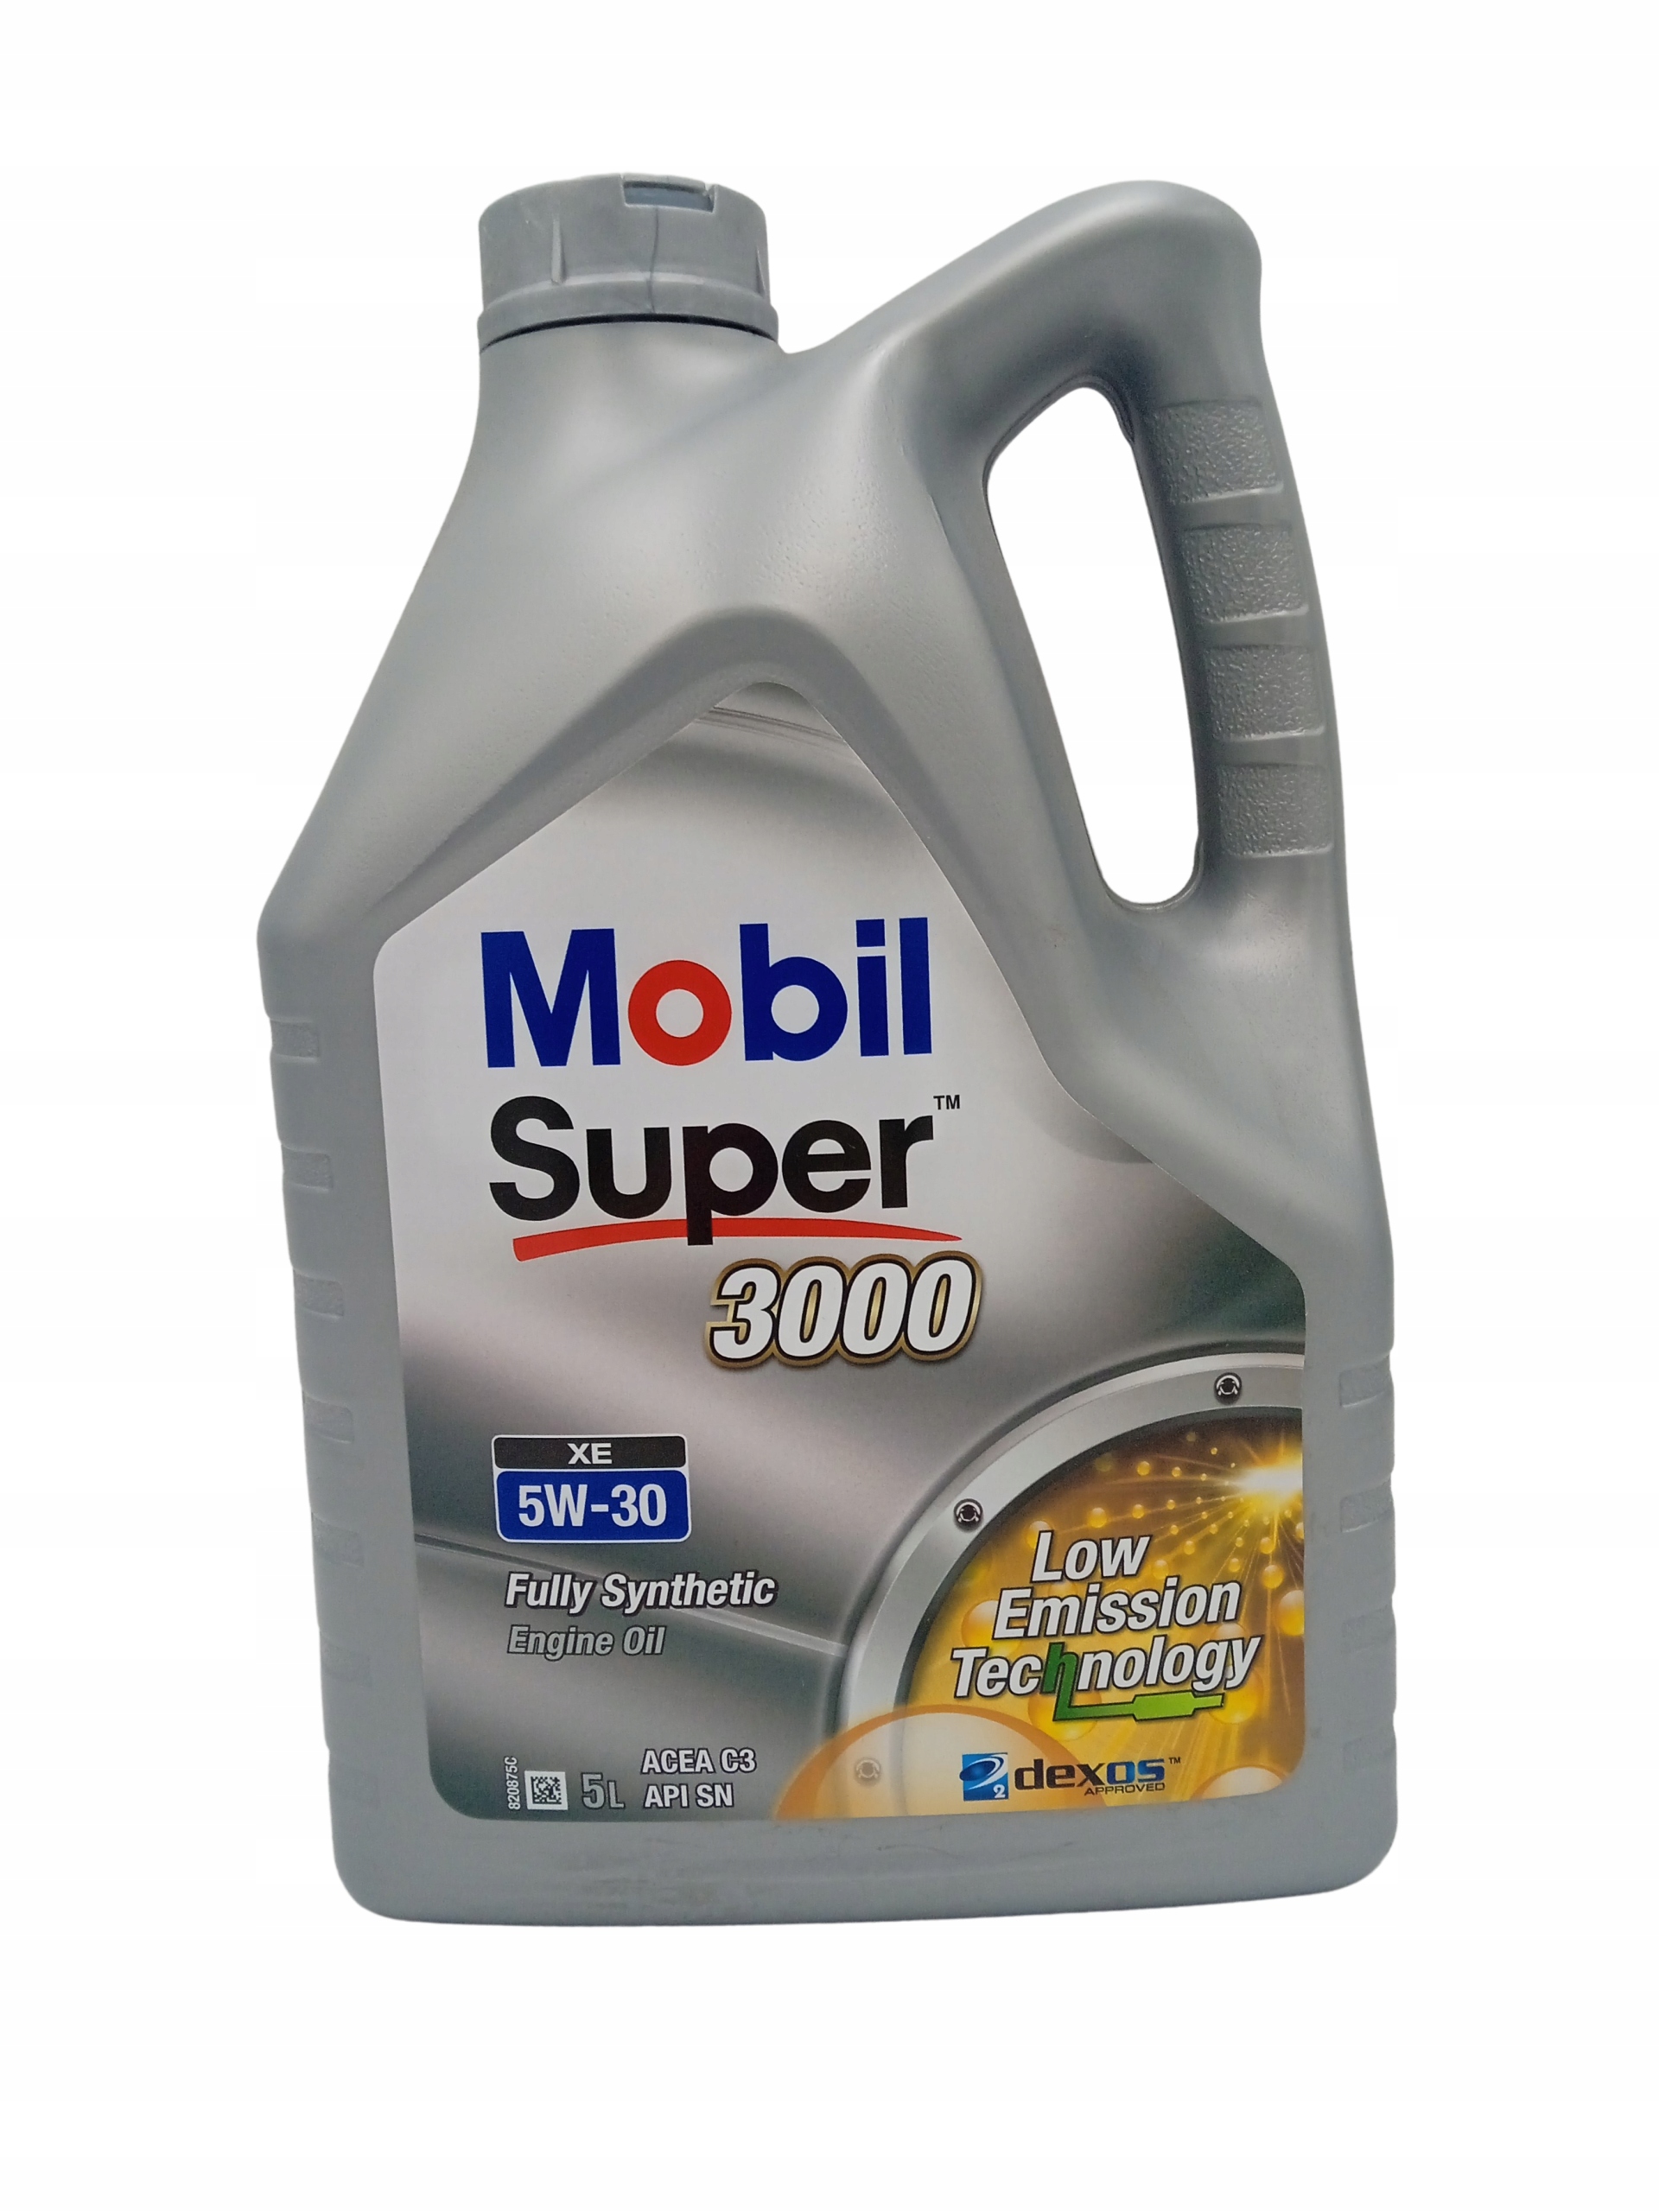 Масло мобил 3000 отзыв. Mobil super 3000 x1 5w-30. Моторная масла mobil СП формула 05:30. Масло 5w30 1 литр mobile. Моторное масло формула.